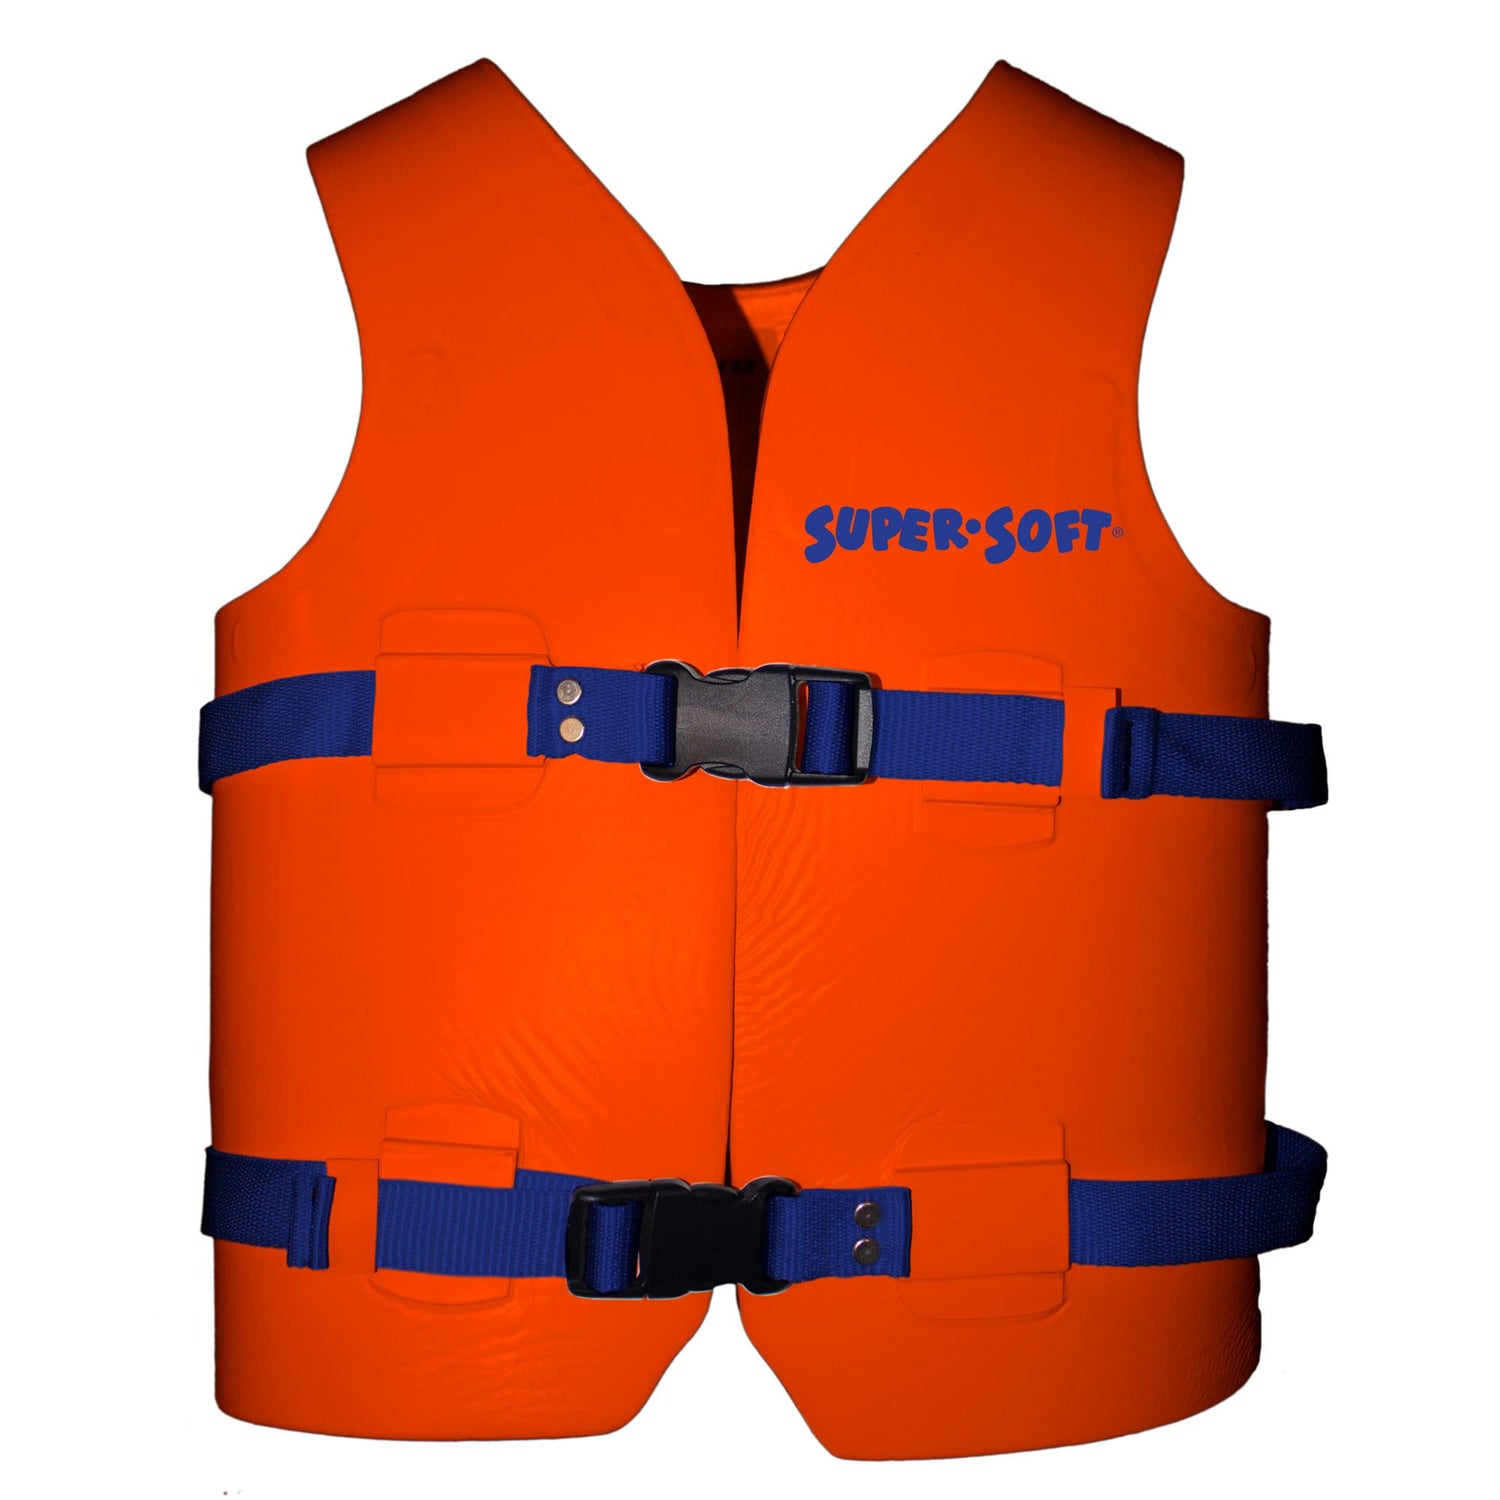 TRC Recreation Super Soft Child Size Medium Life Jacket USCG Approved Vinyl Coated Foam Swim Vest for Kids Swimming Pool and Beach Gear, Sunset Orange